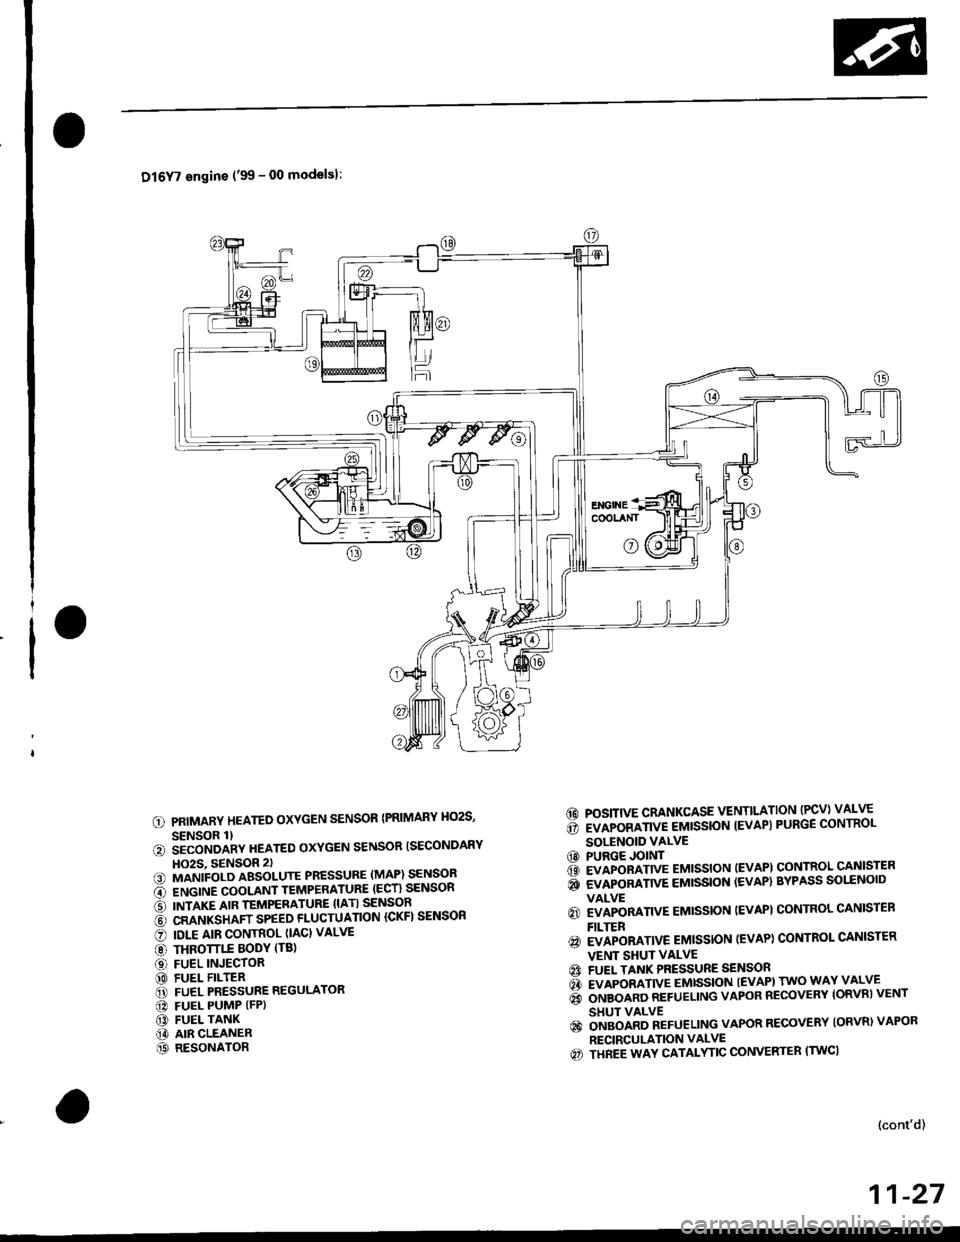 HONDA CIVIC 1997 6.G Owners Manual Dl6Y7 engins (99 - 00 modelsl:
PRIMARY HEATED OXYGEN SENSOR {PRIMARY HO2S,
SENSOR 1)iiconoanv neareo oxYGEN sENsoR ISECoNDARY
HO2S, 9ENSOR 2)MANIFOLD ABSOLUTE PRESSURE (MAP) SENSOR
ENGINE COOLANT TEM